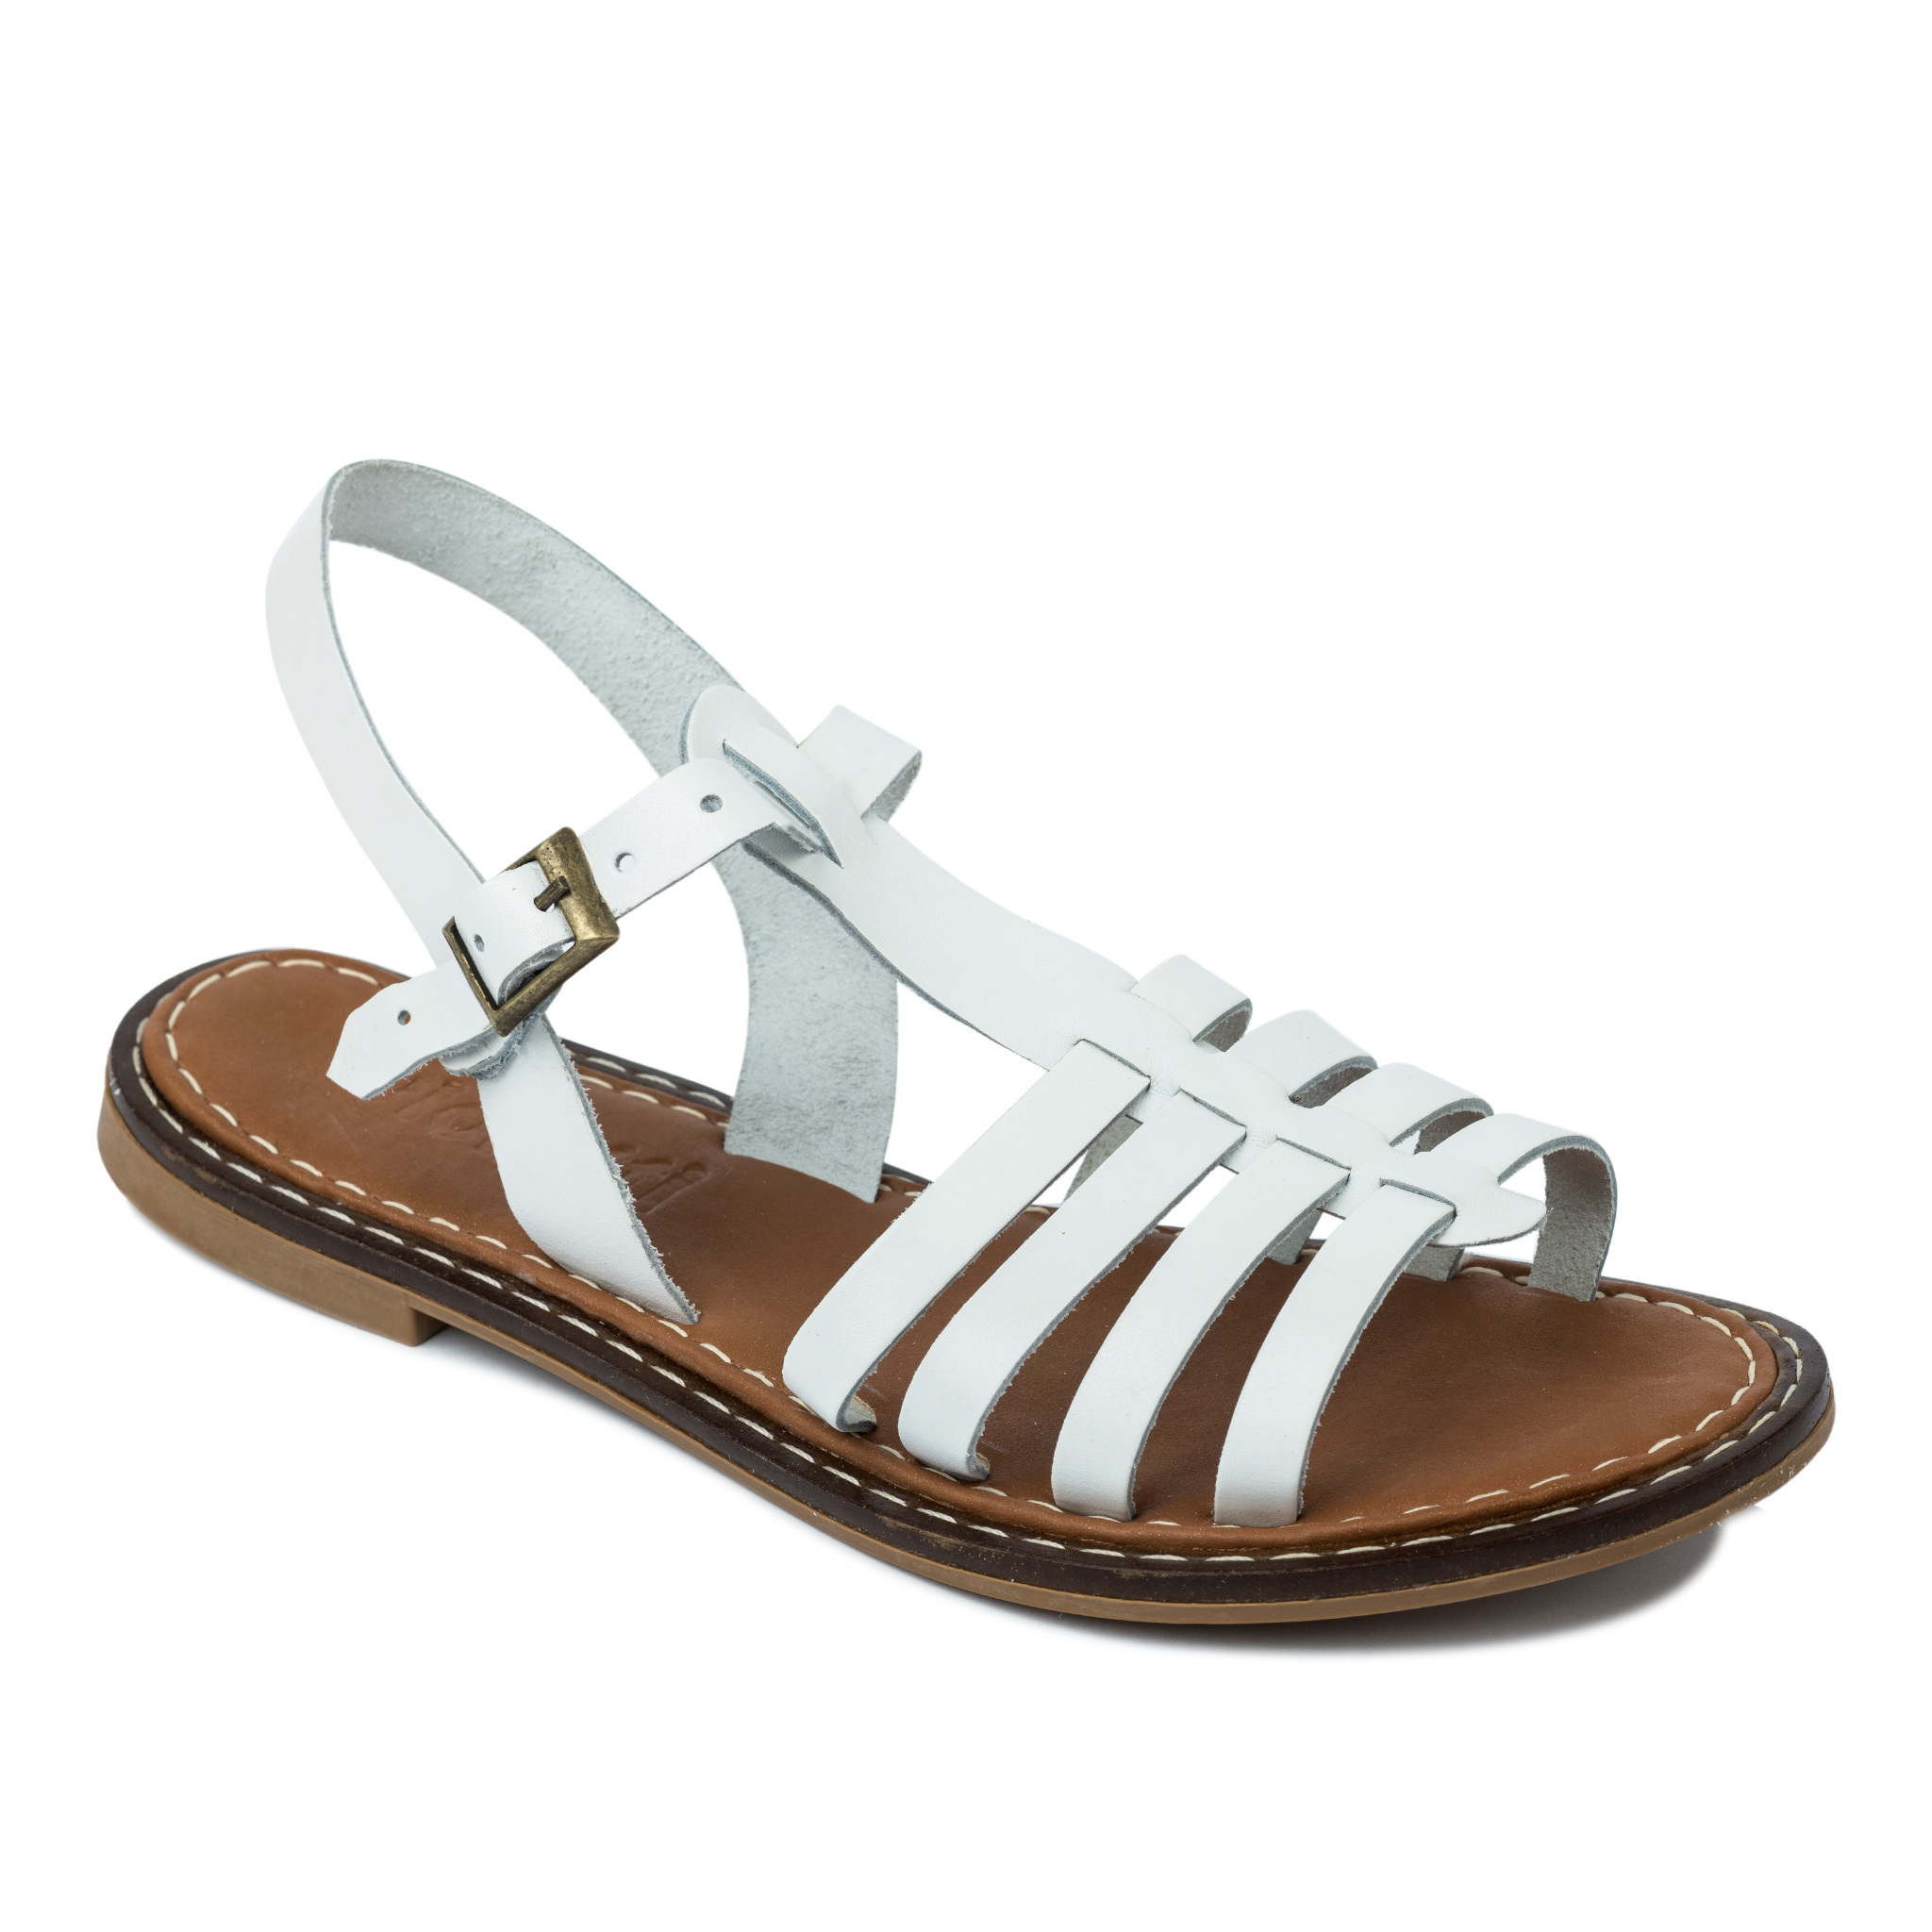 Women sandals A347 - WHITE